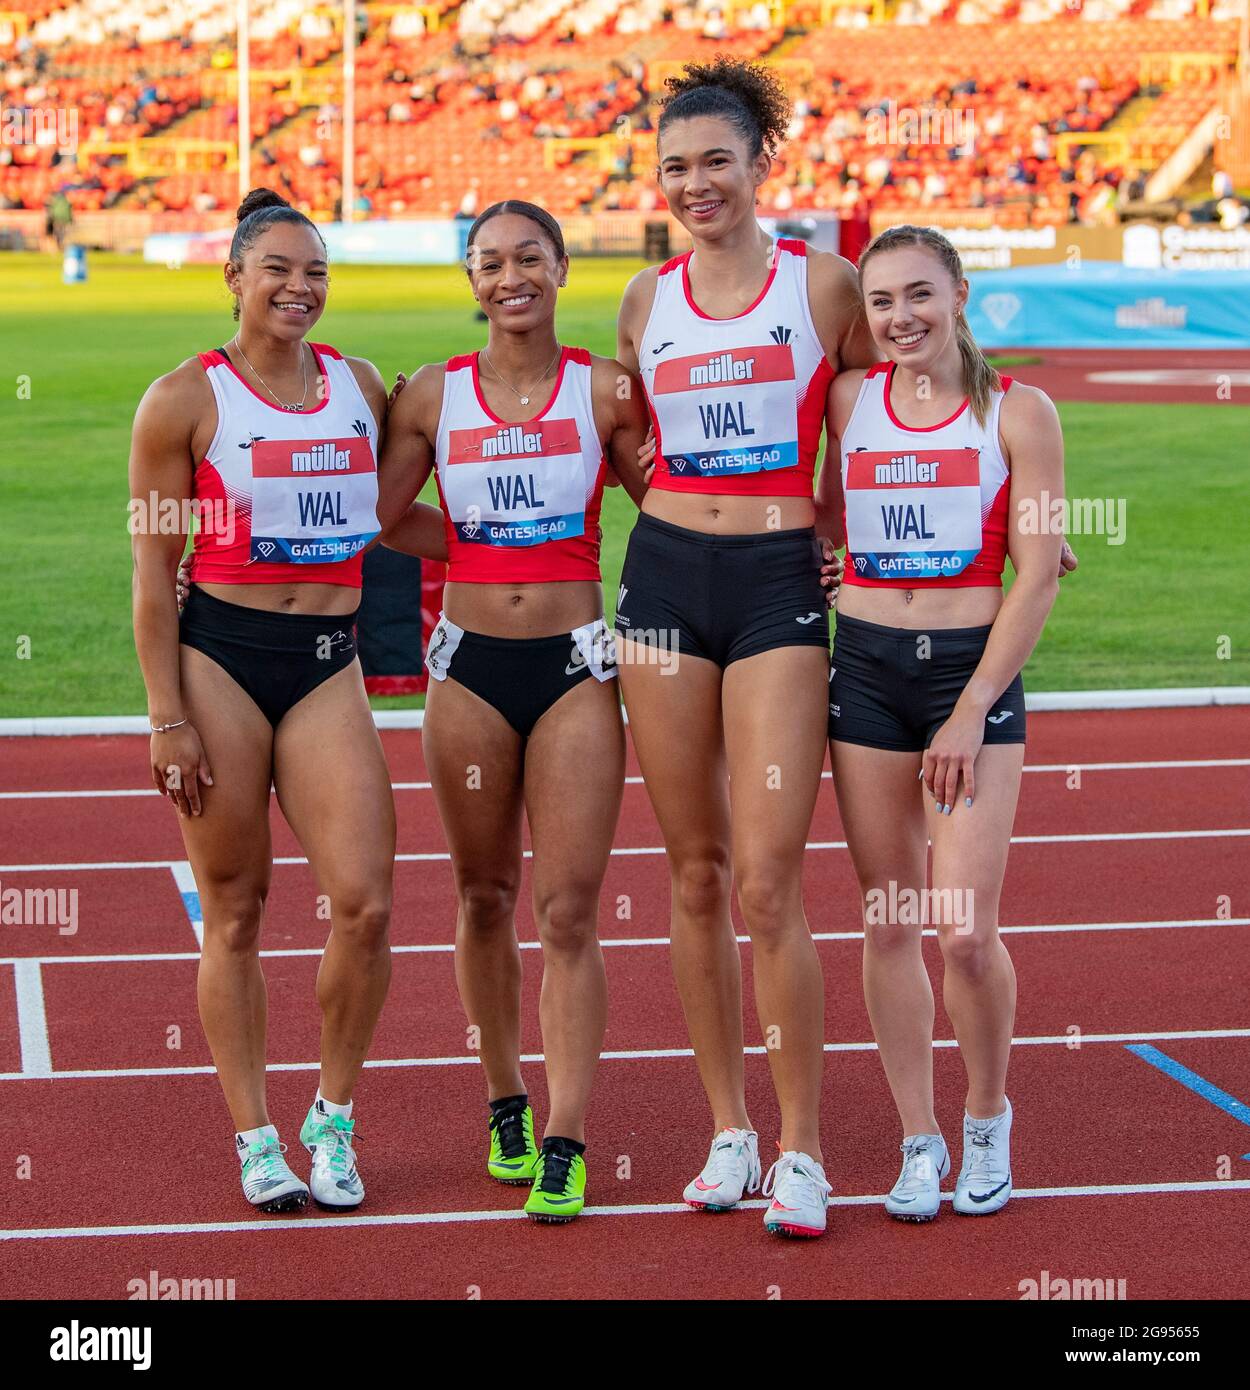 GATESHEAD, ENGLAND - JULY 13: Mica Moore, Amy Odunaiya, Melissa Roberts and Hannah Brier (WAL) competing in the 4x100m womens relay race at the Muller Stock Photo